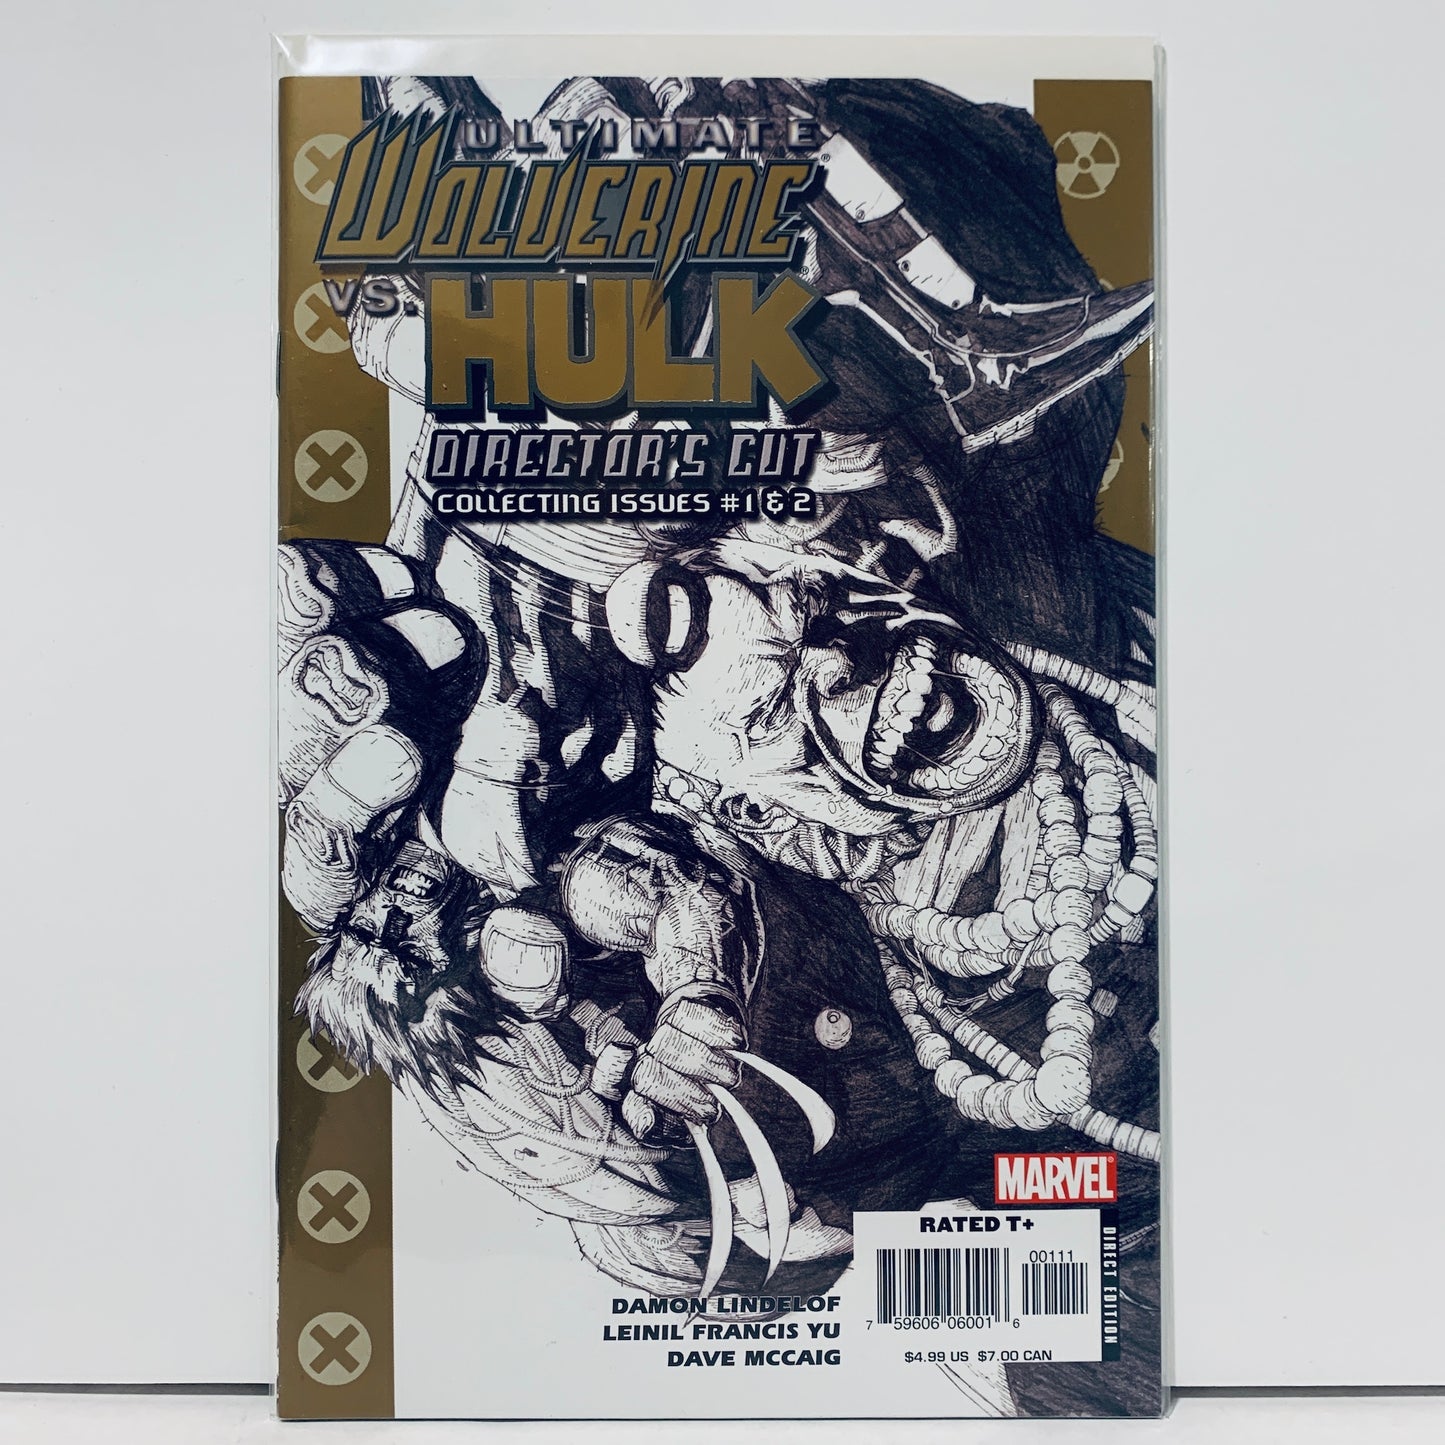 Ultimate Wolverine vs. Hulk Directors Cut (2006) #1 (VF)